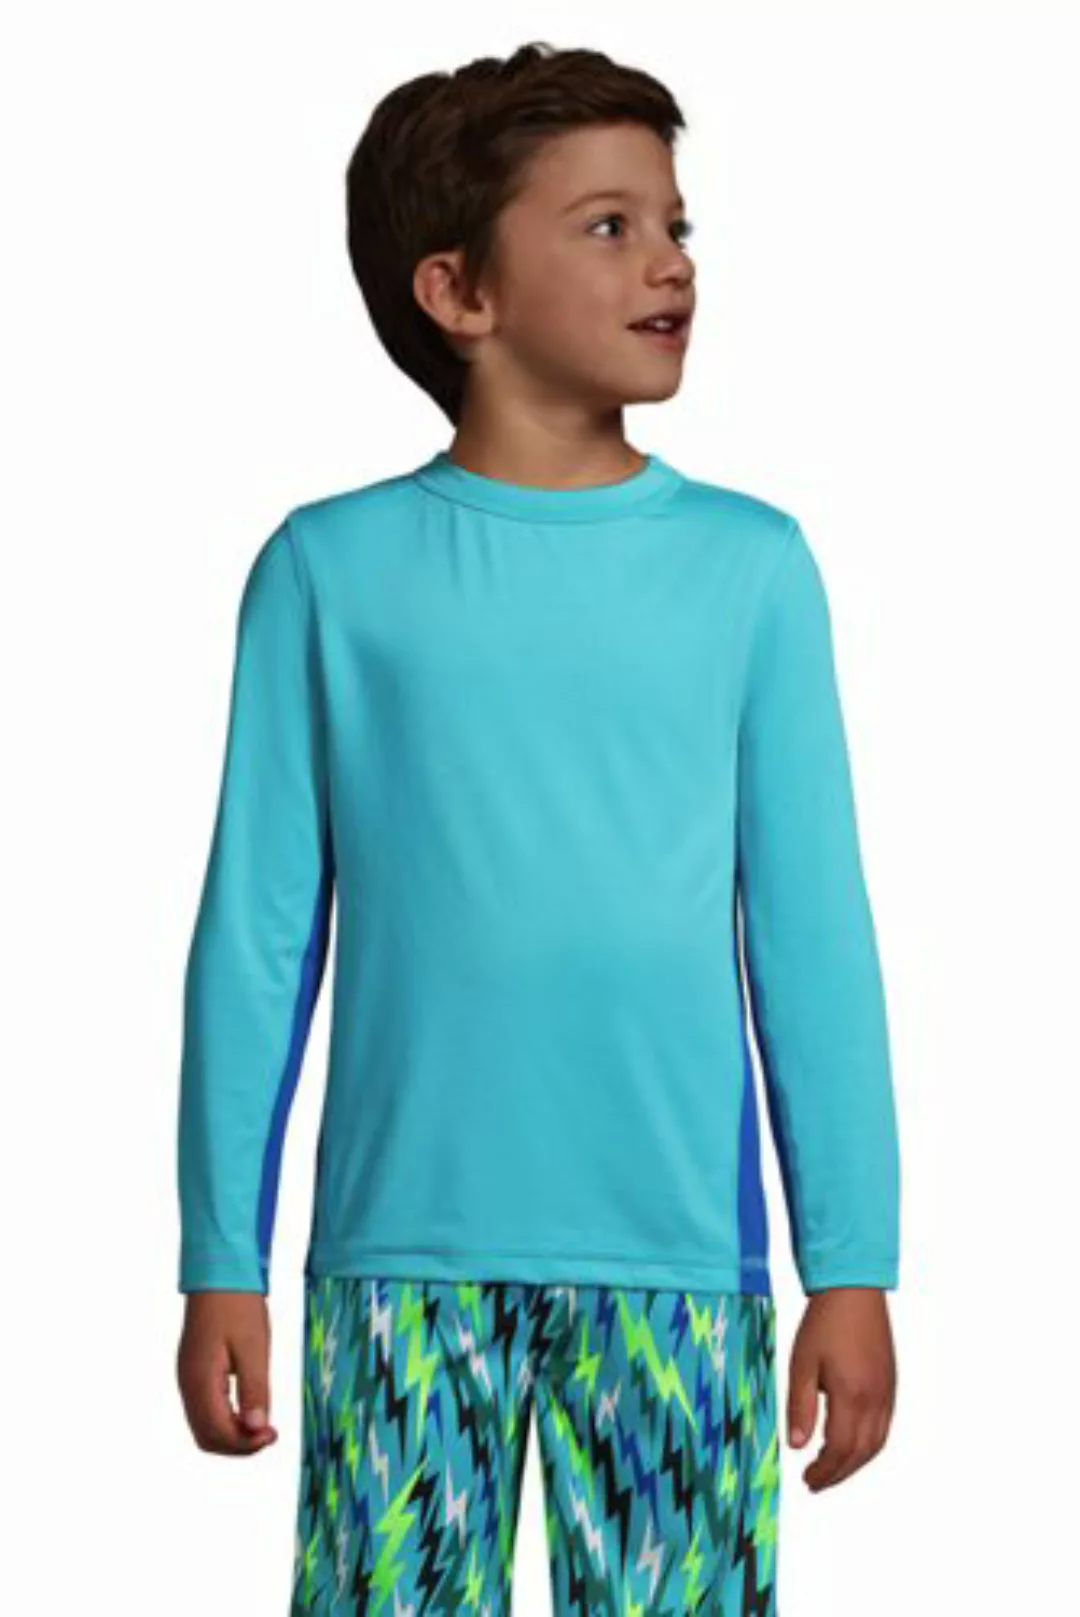 ACTIVE Langarm-Shirt, Größe: 152-164, Blau, Elasthan, by Lands' End, Scuba günstig online kaufen